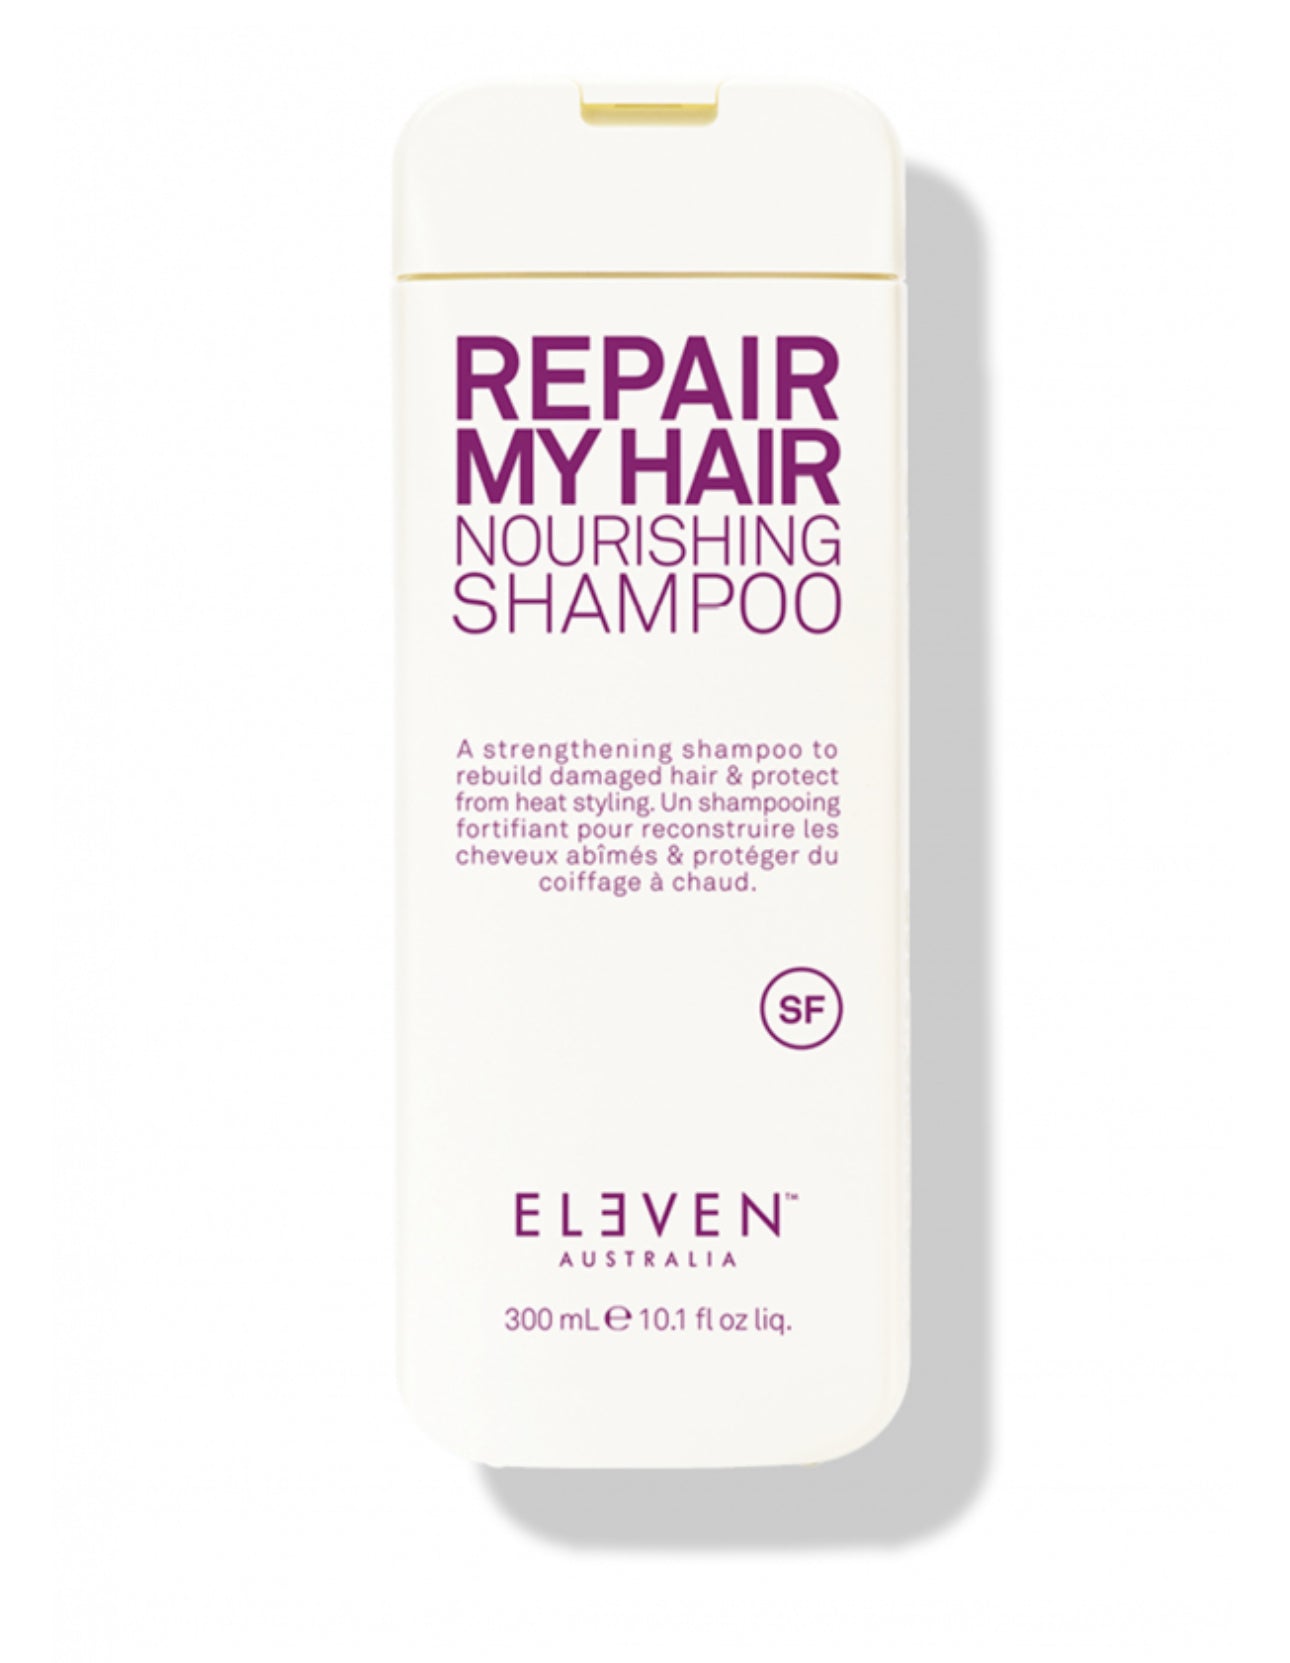 Eleven Australia repair my hair nourishing shampoo